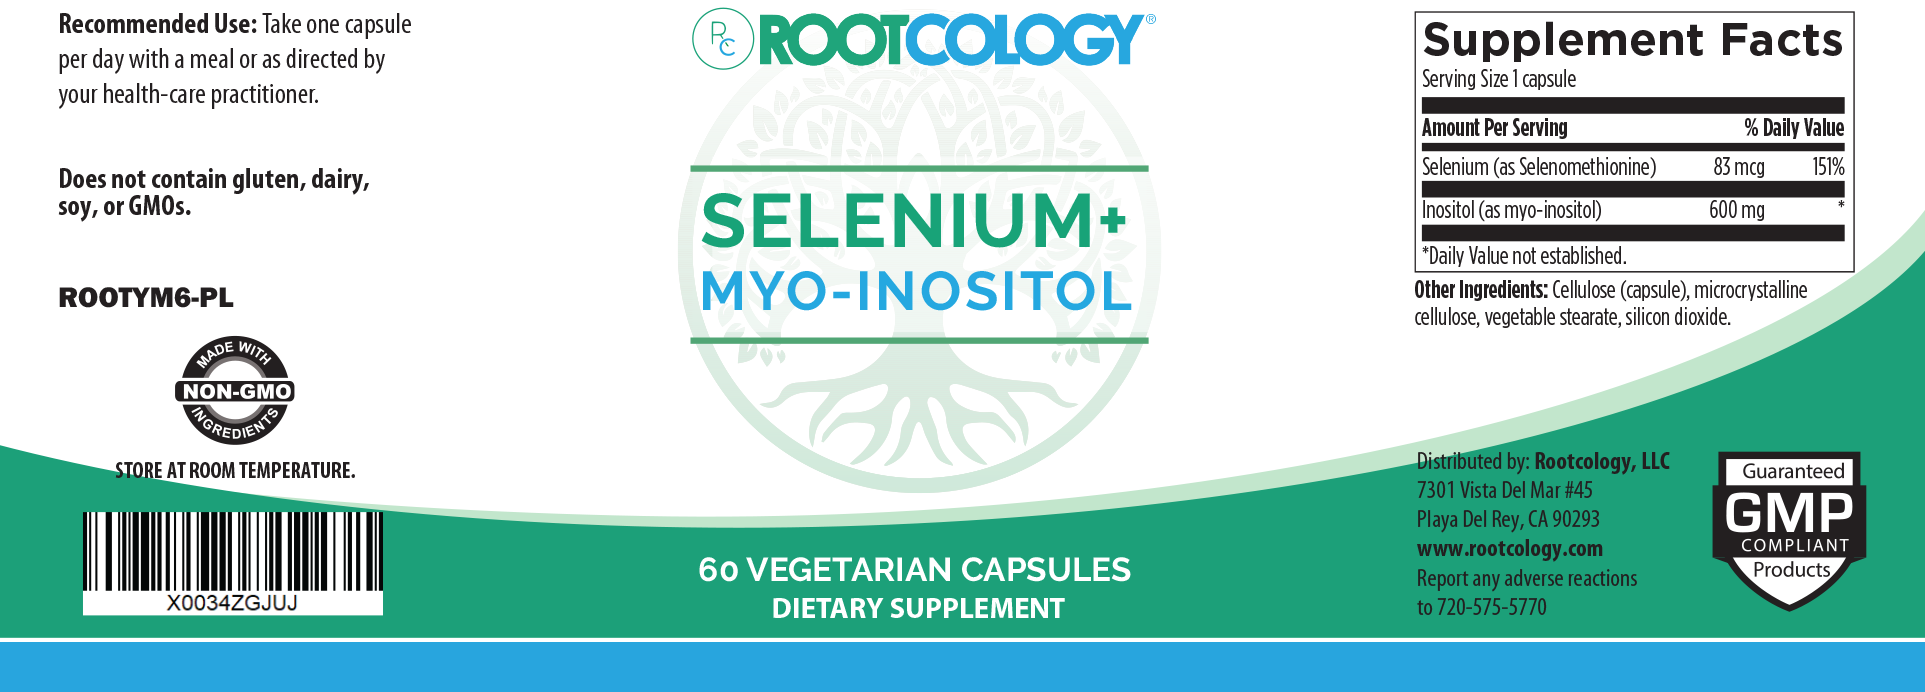 Rootcology Selenium + Myo-Inositol Supplement Label